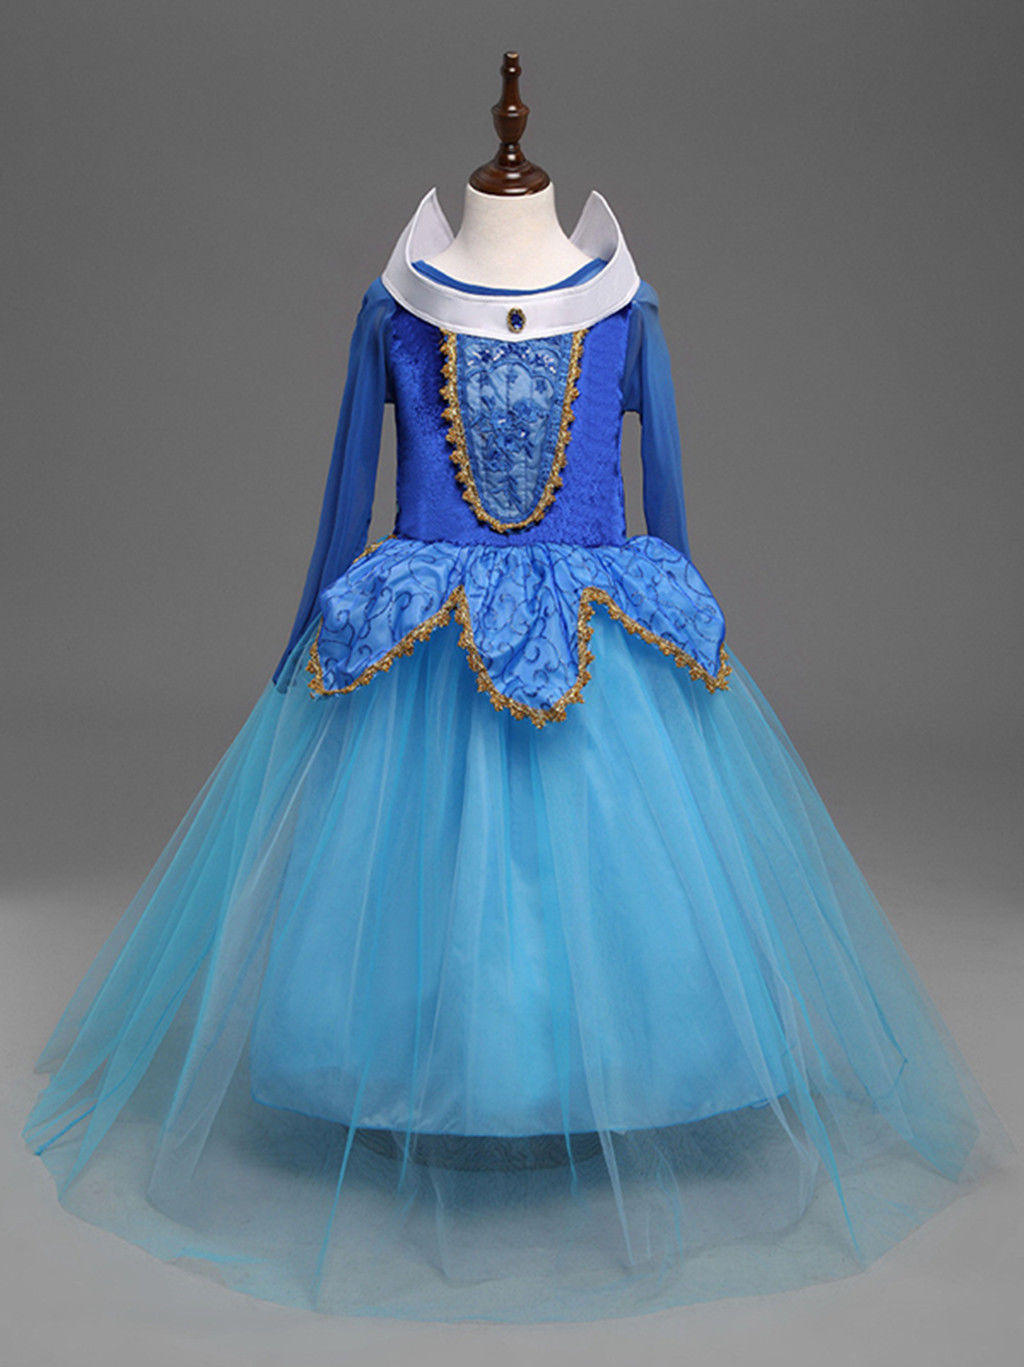 Sleeping Beauty Princess Aurora Party Dress  kids Costume Dress for girls  Blue